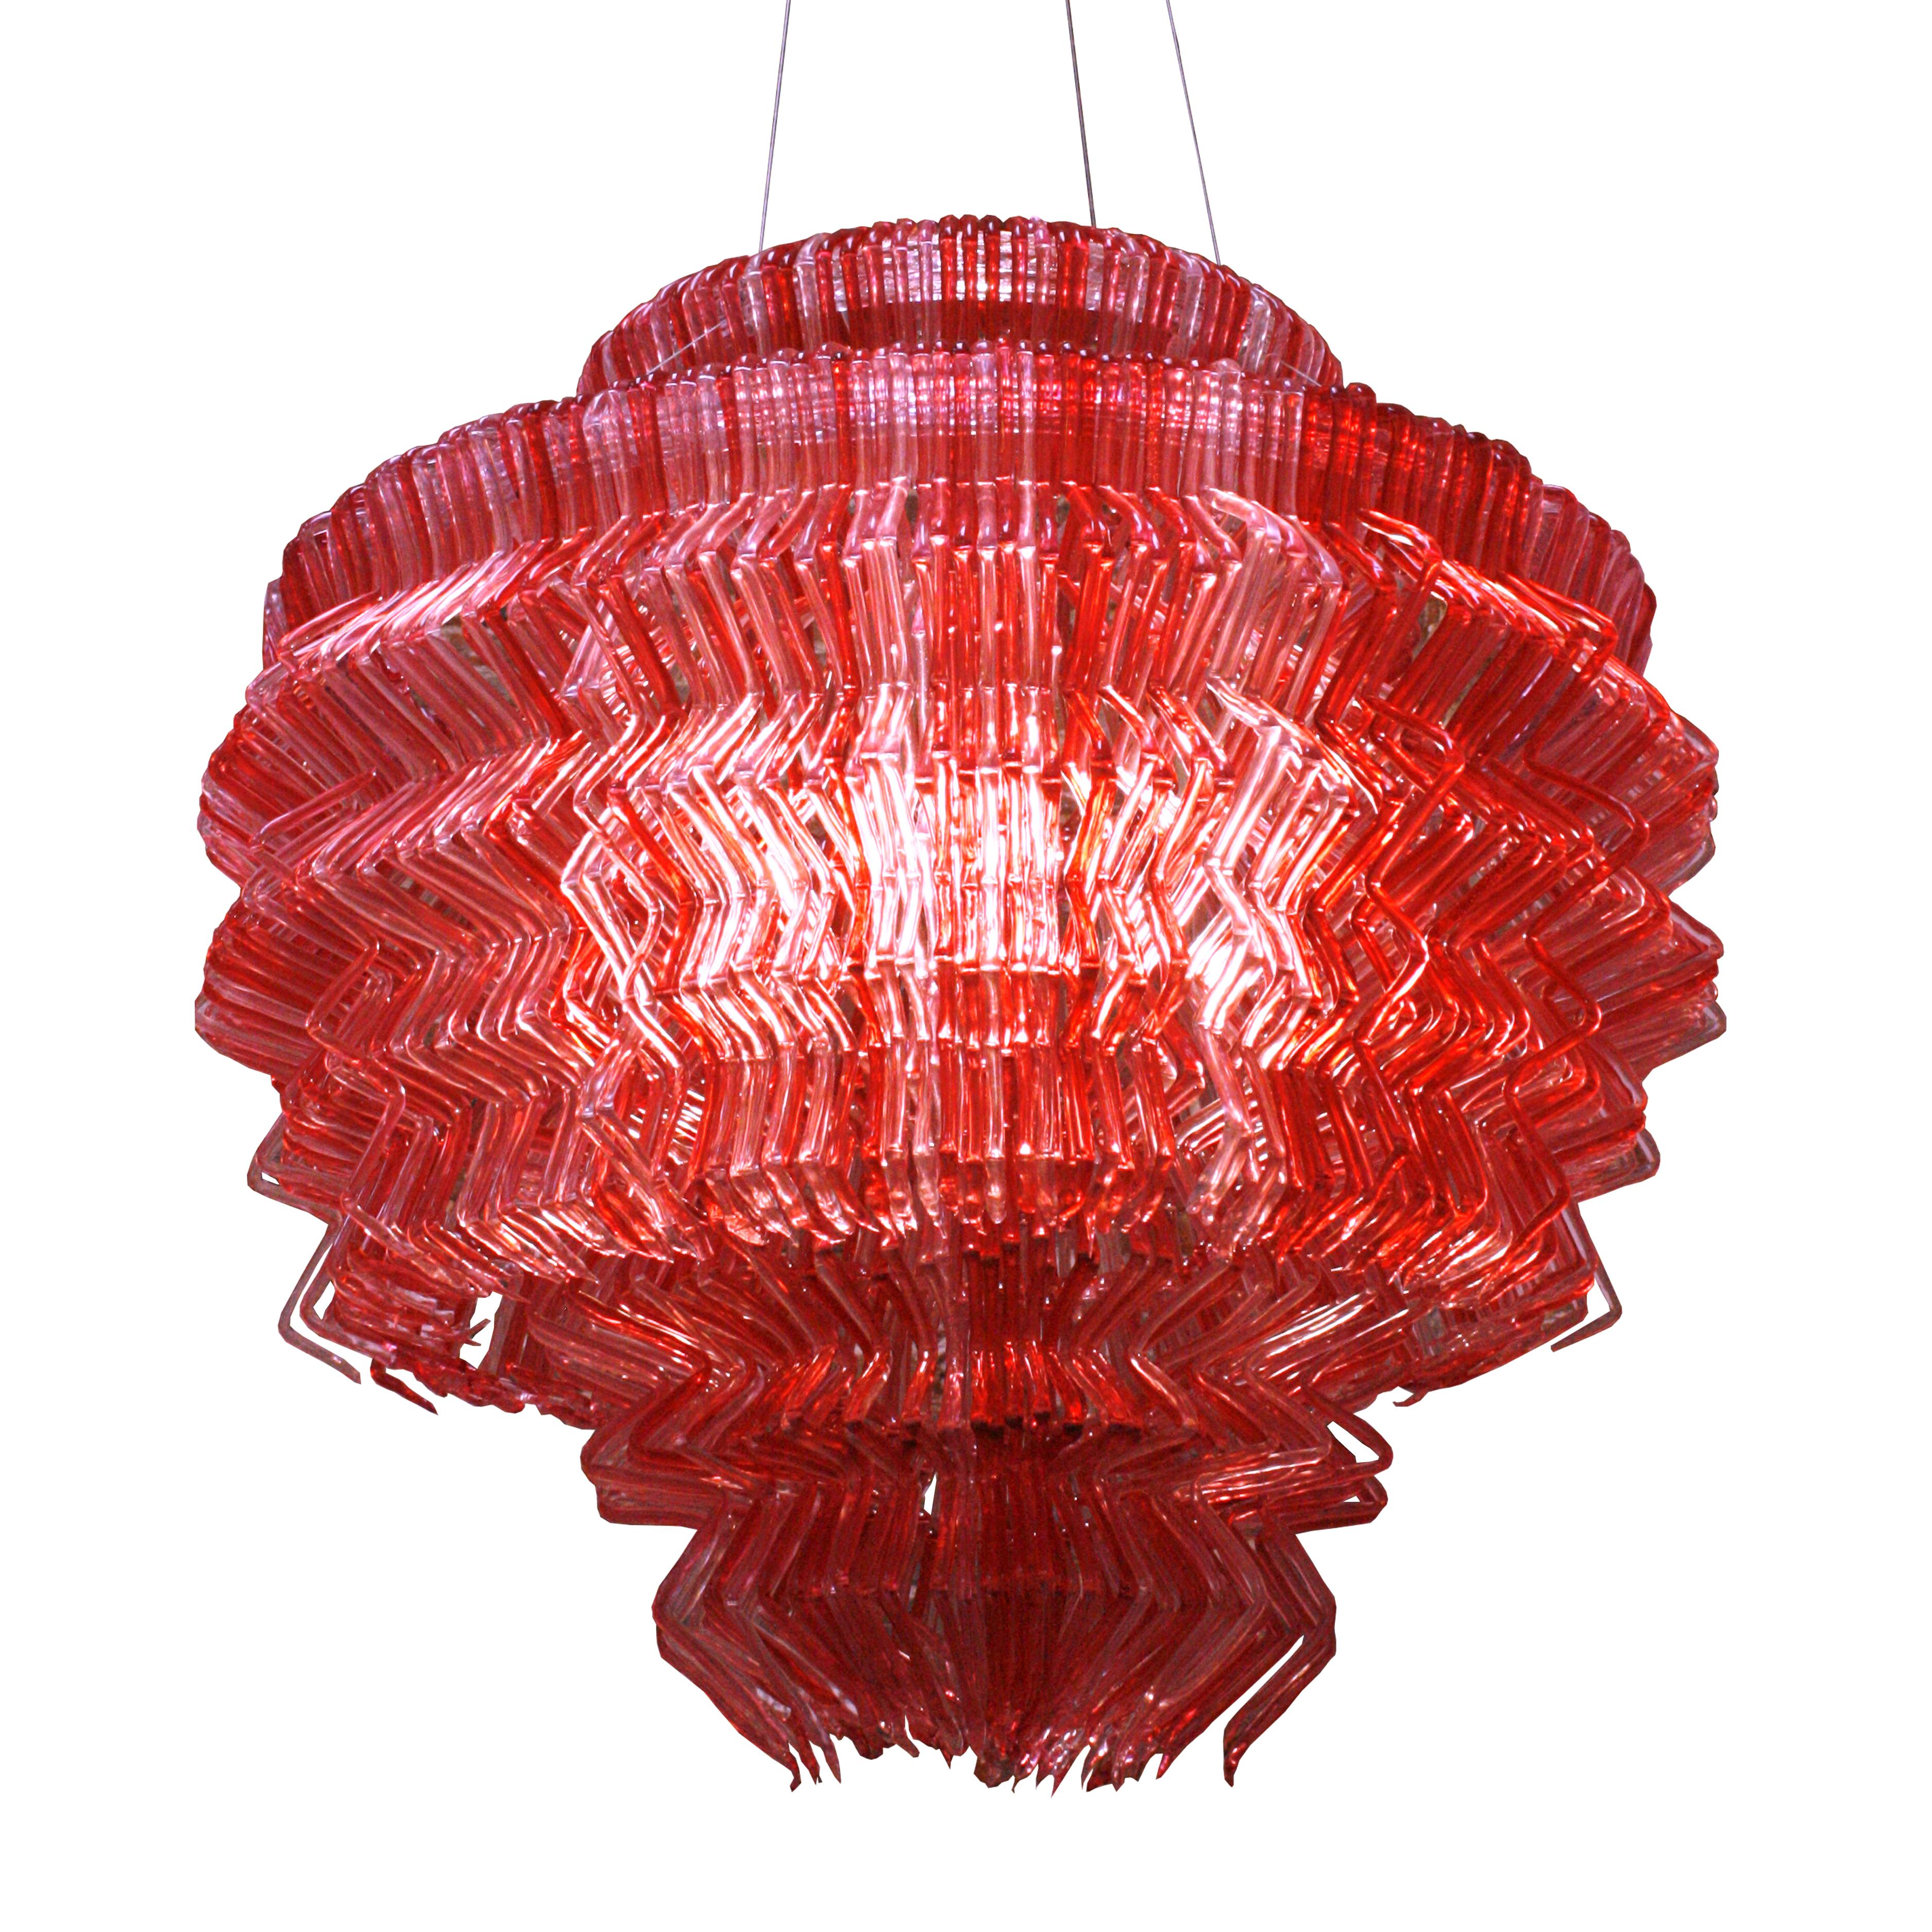 Gorgeous pendant lamp designed by the Italian designer Jacopo Foggini. Lamp model 